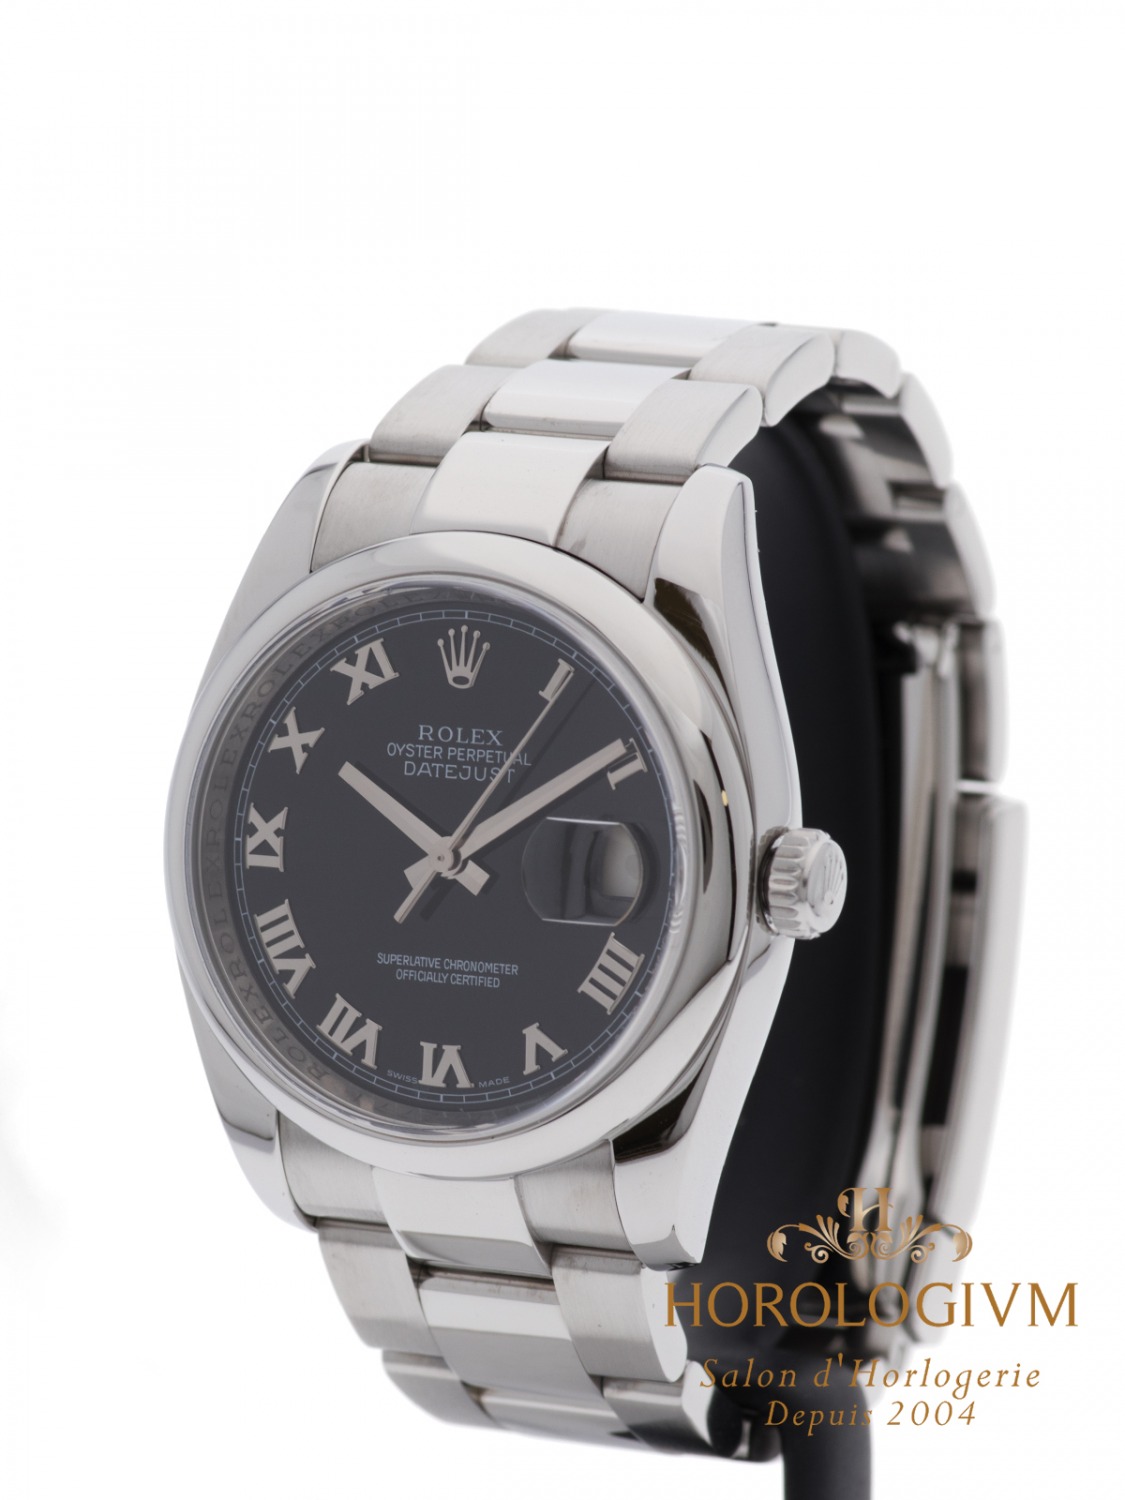 Rolex Datejust 36MM Black Dial 116200 watch, silver